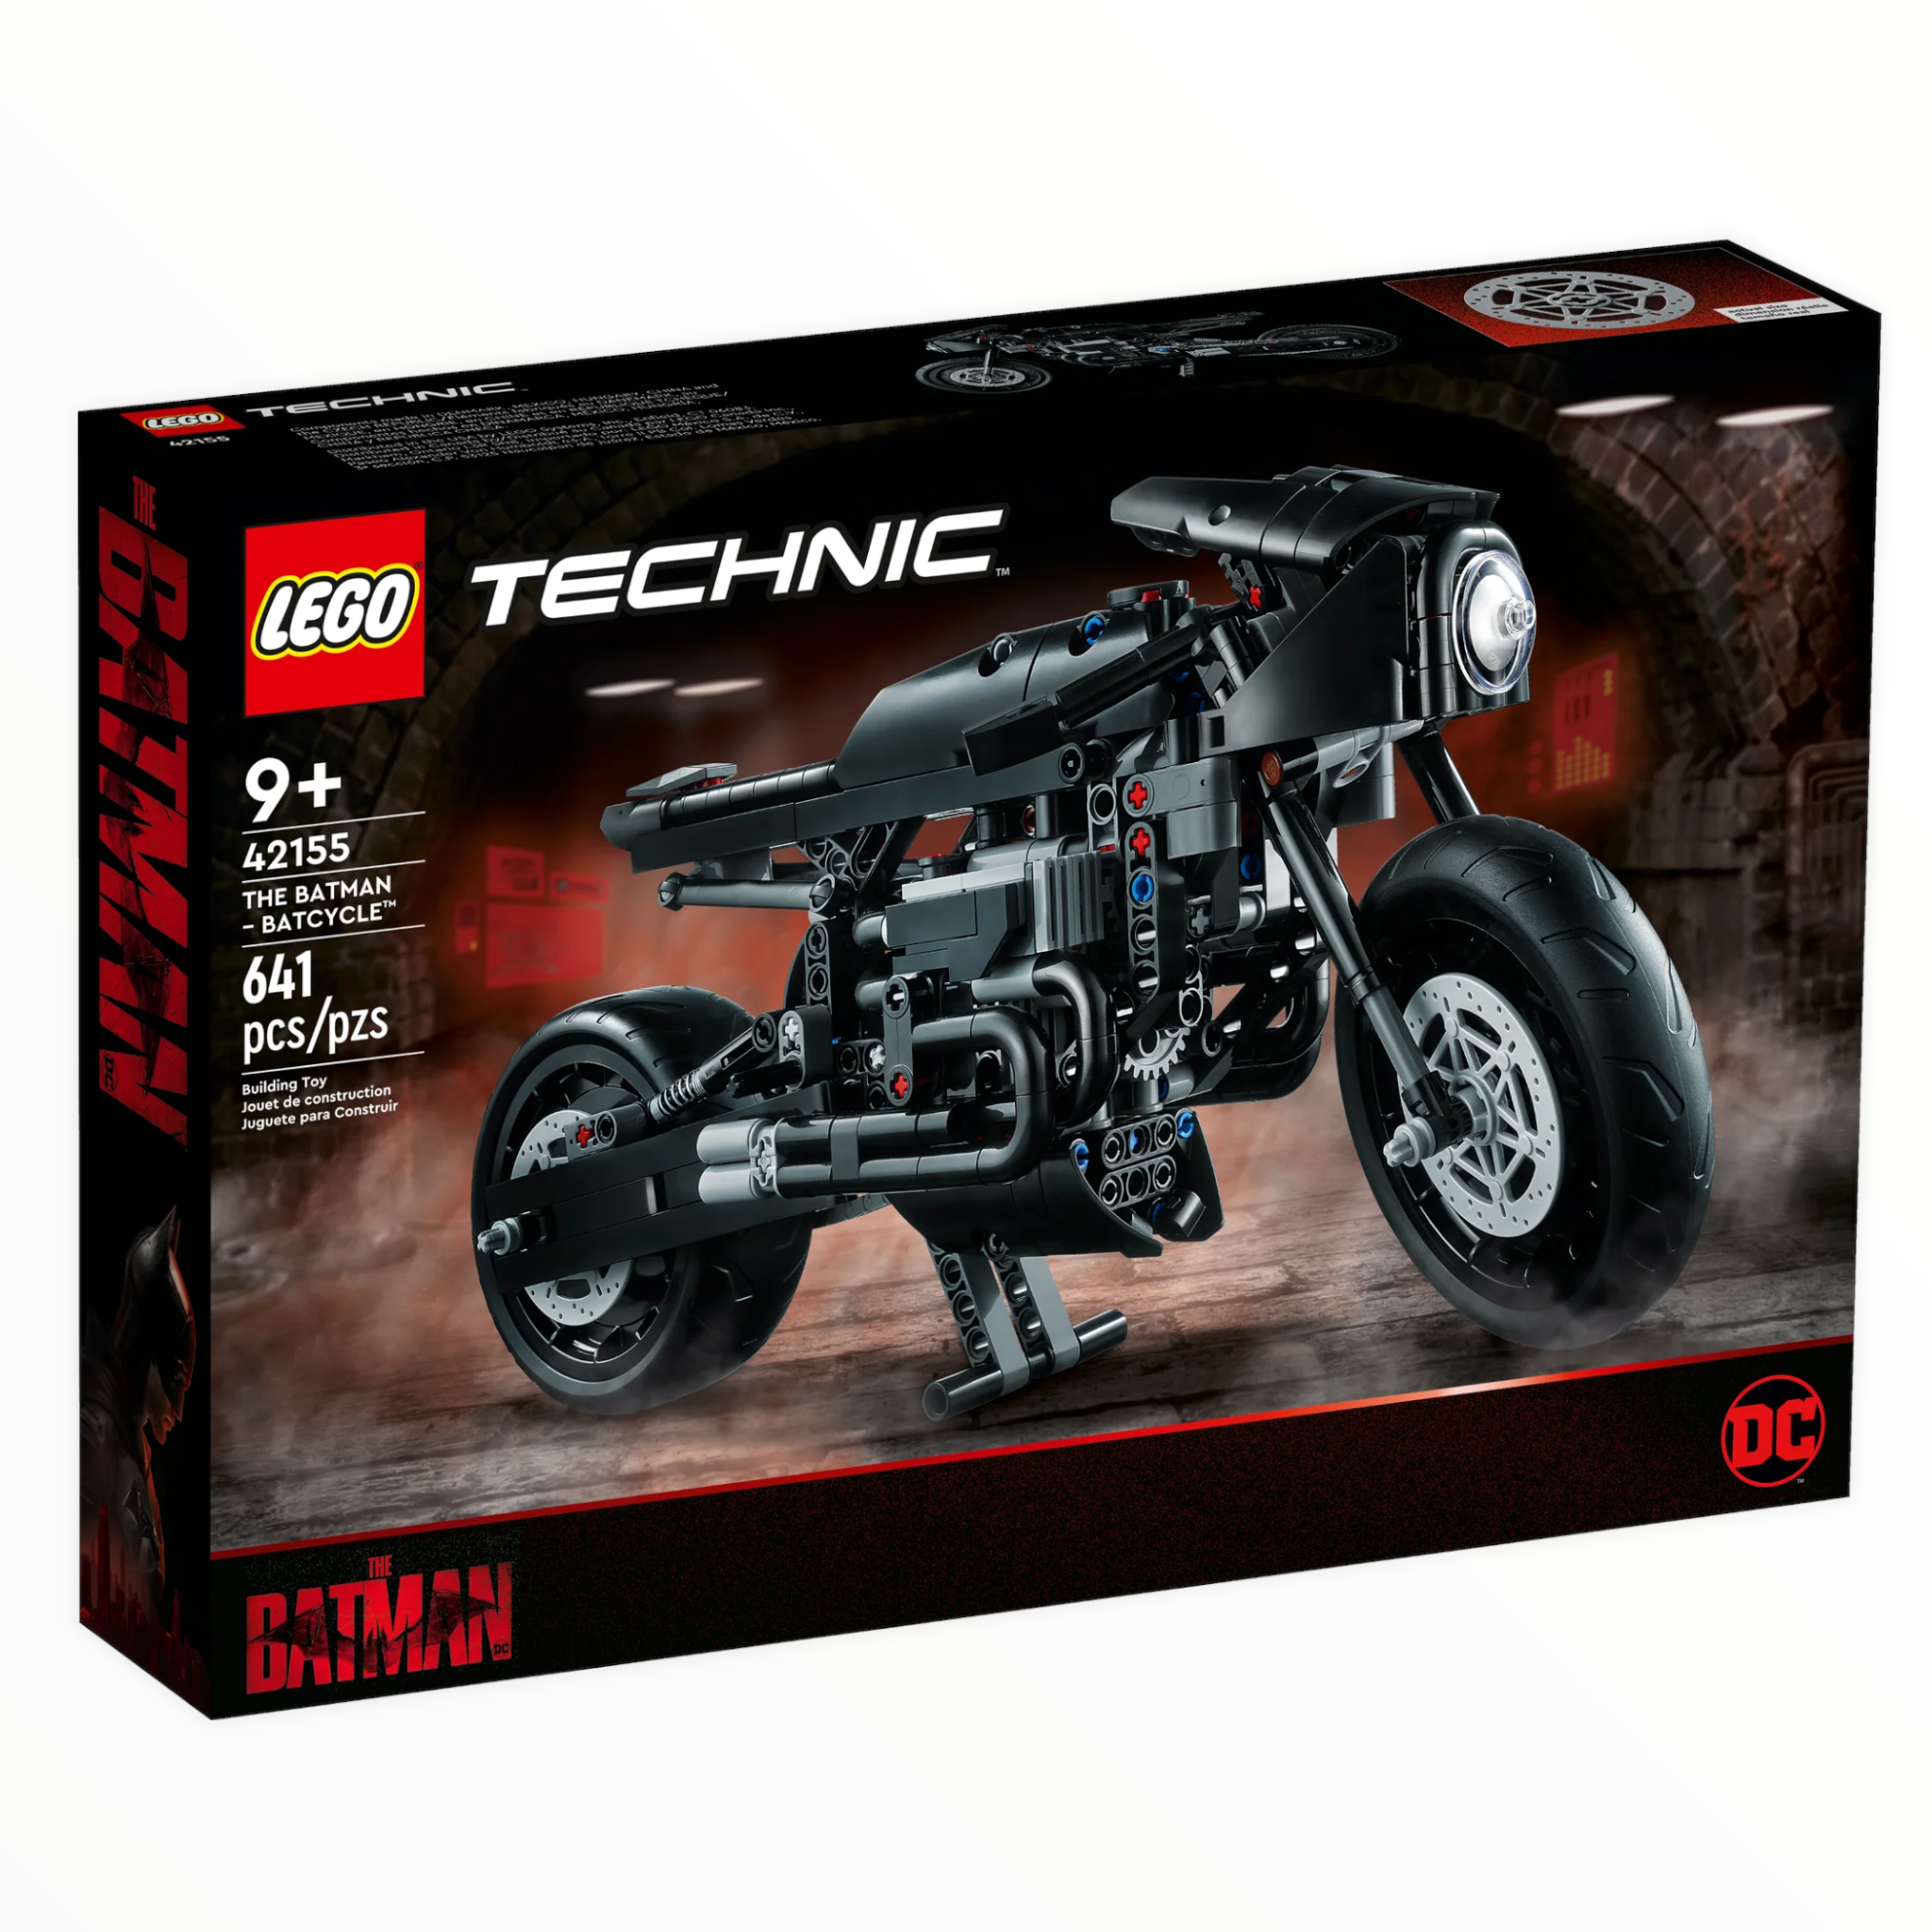 42155 Technic The Batman - Batcycle